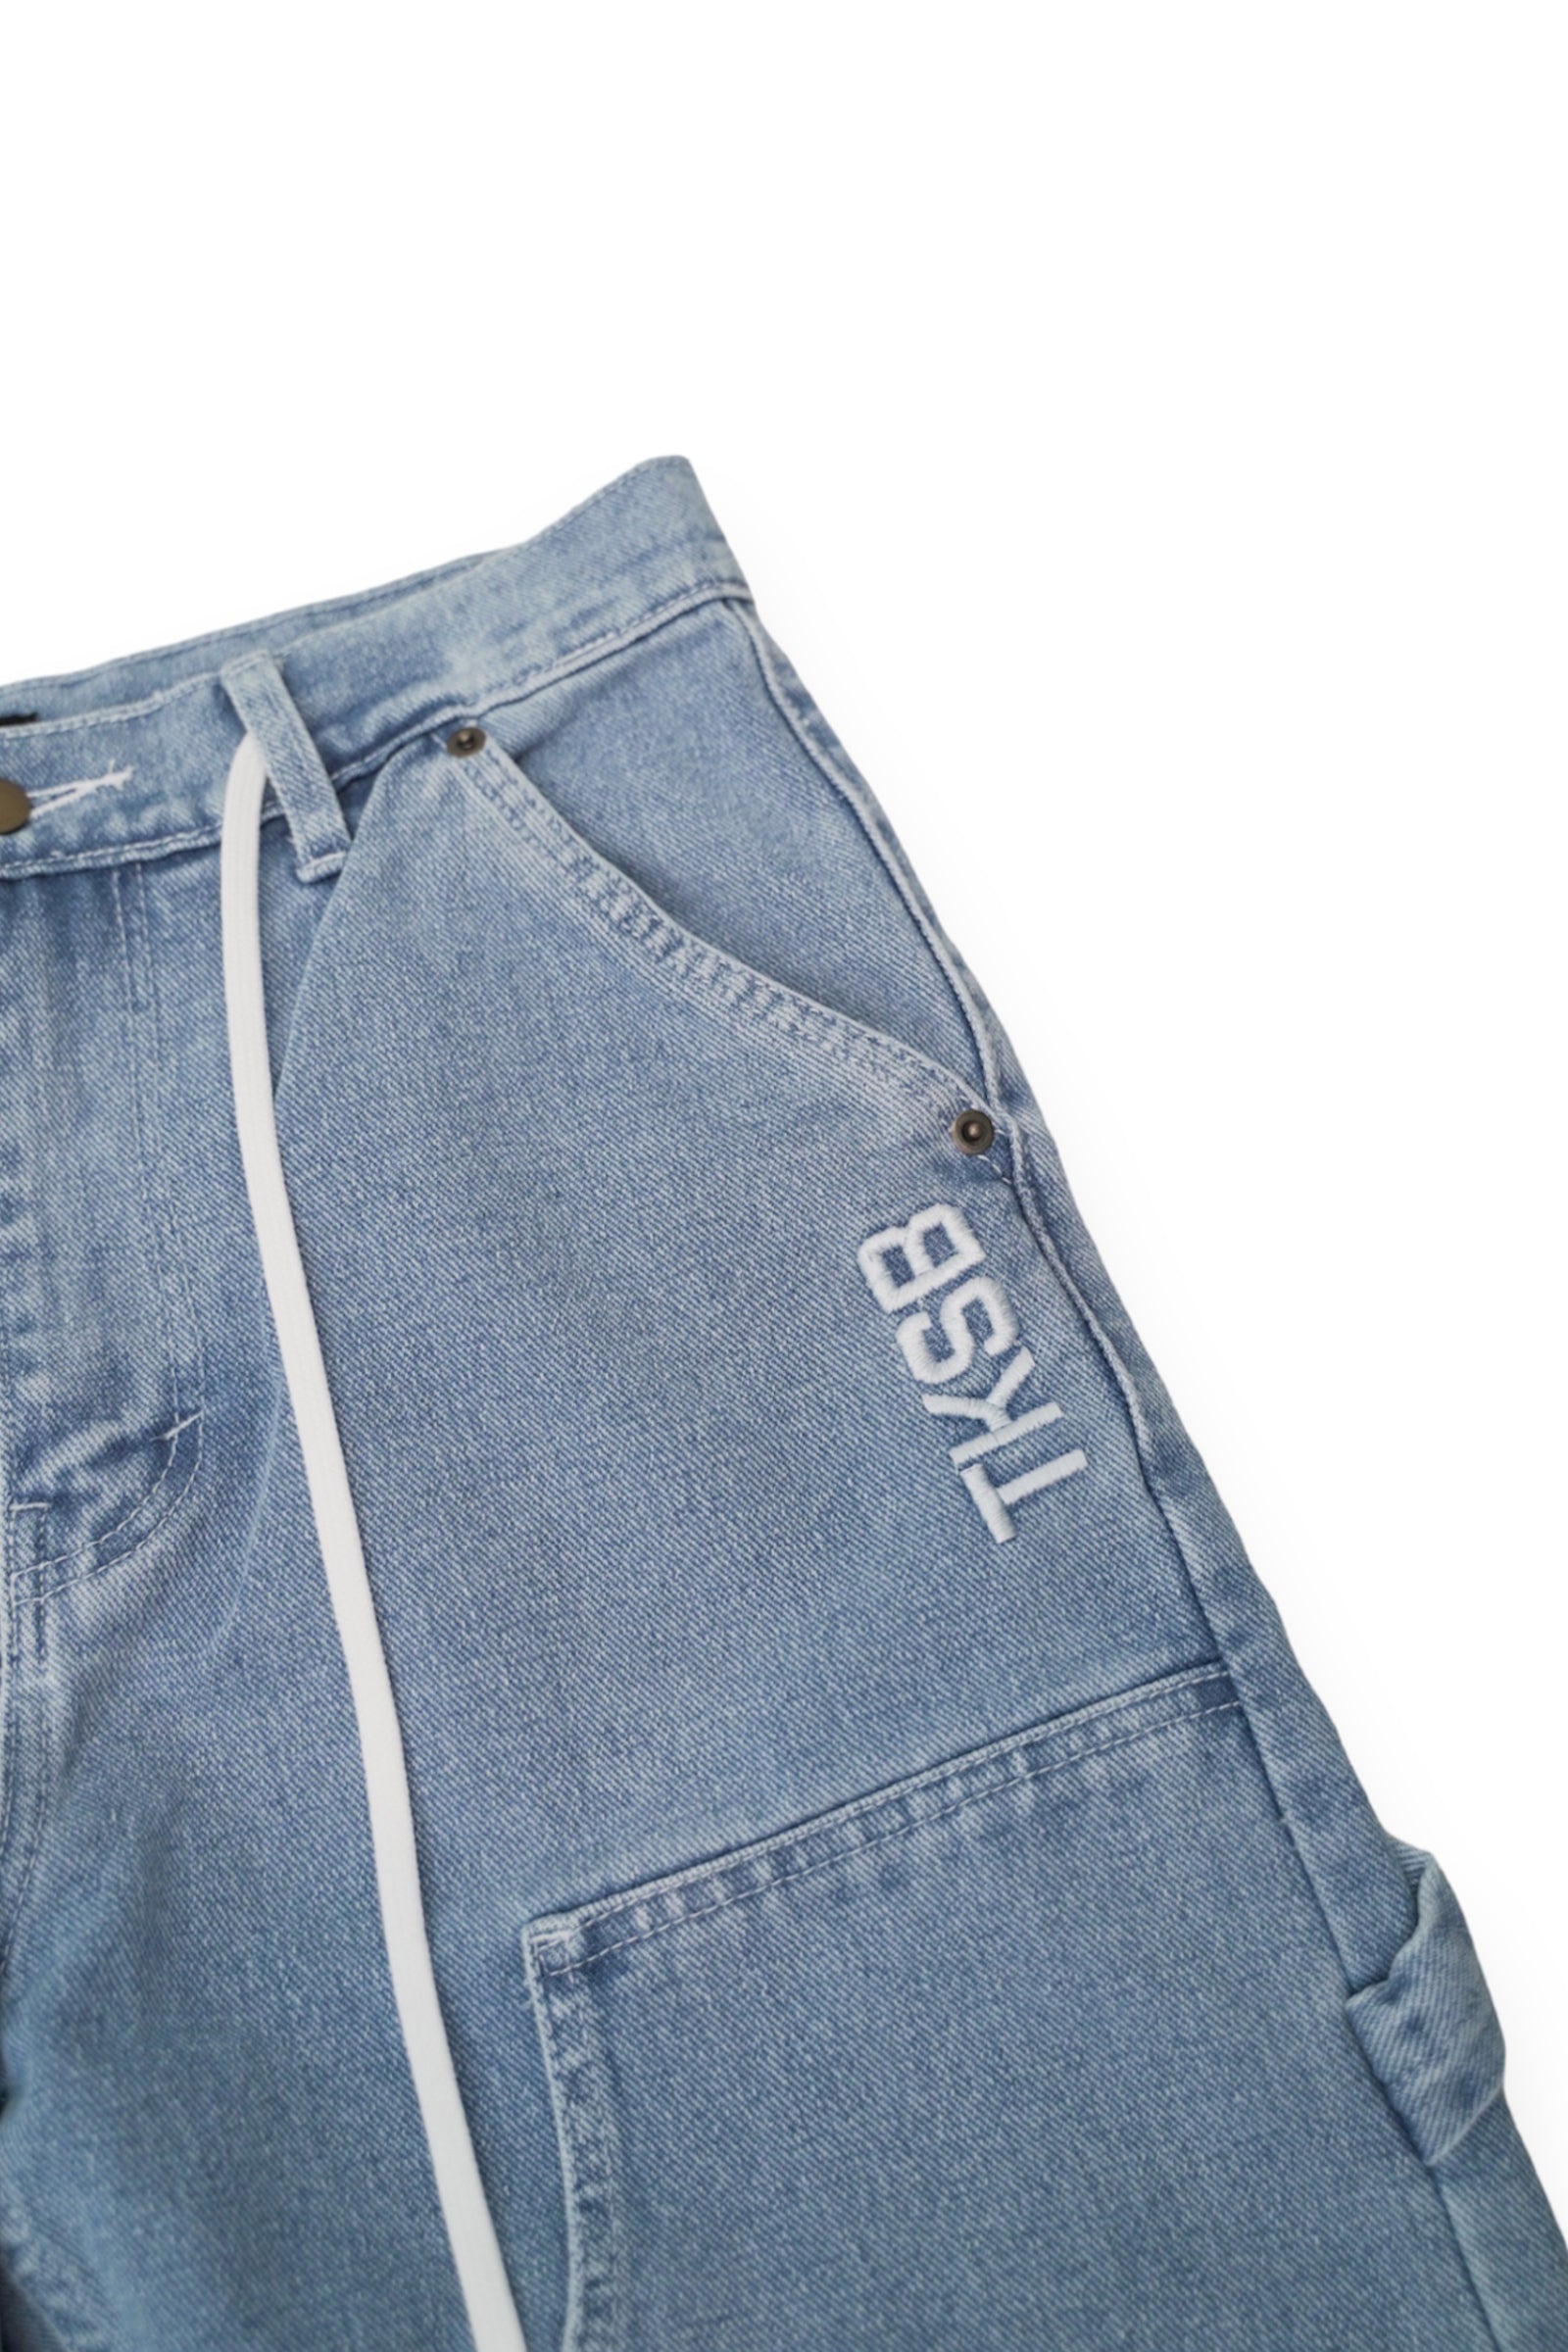 TKSB - Essential Double Knee Jeans